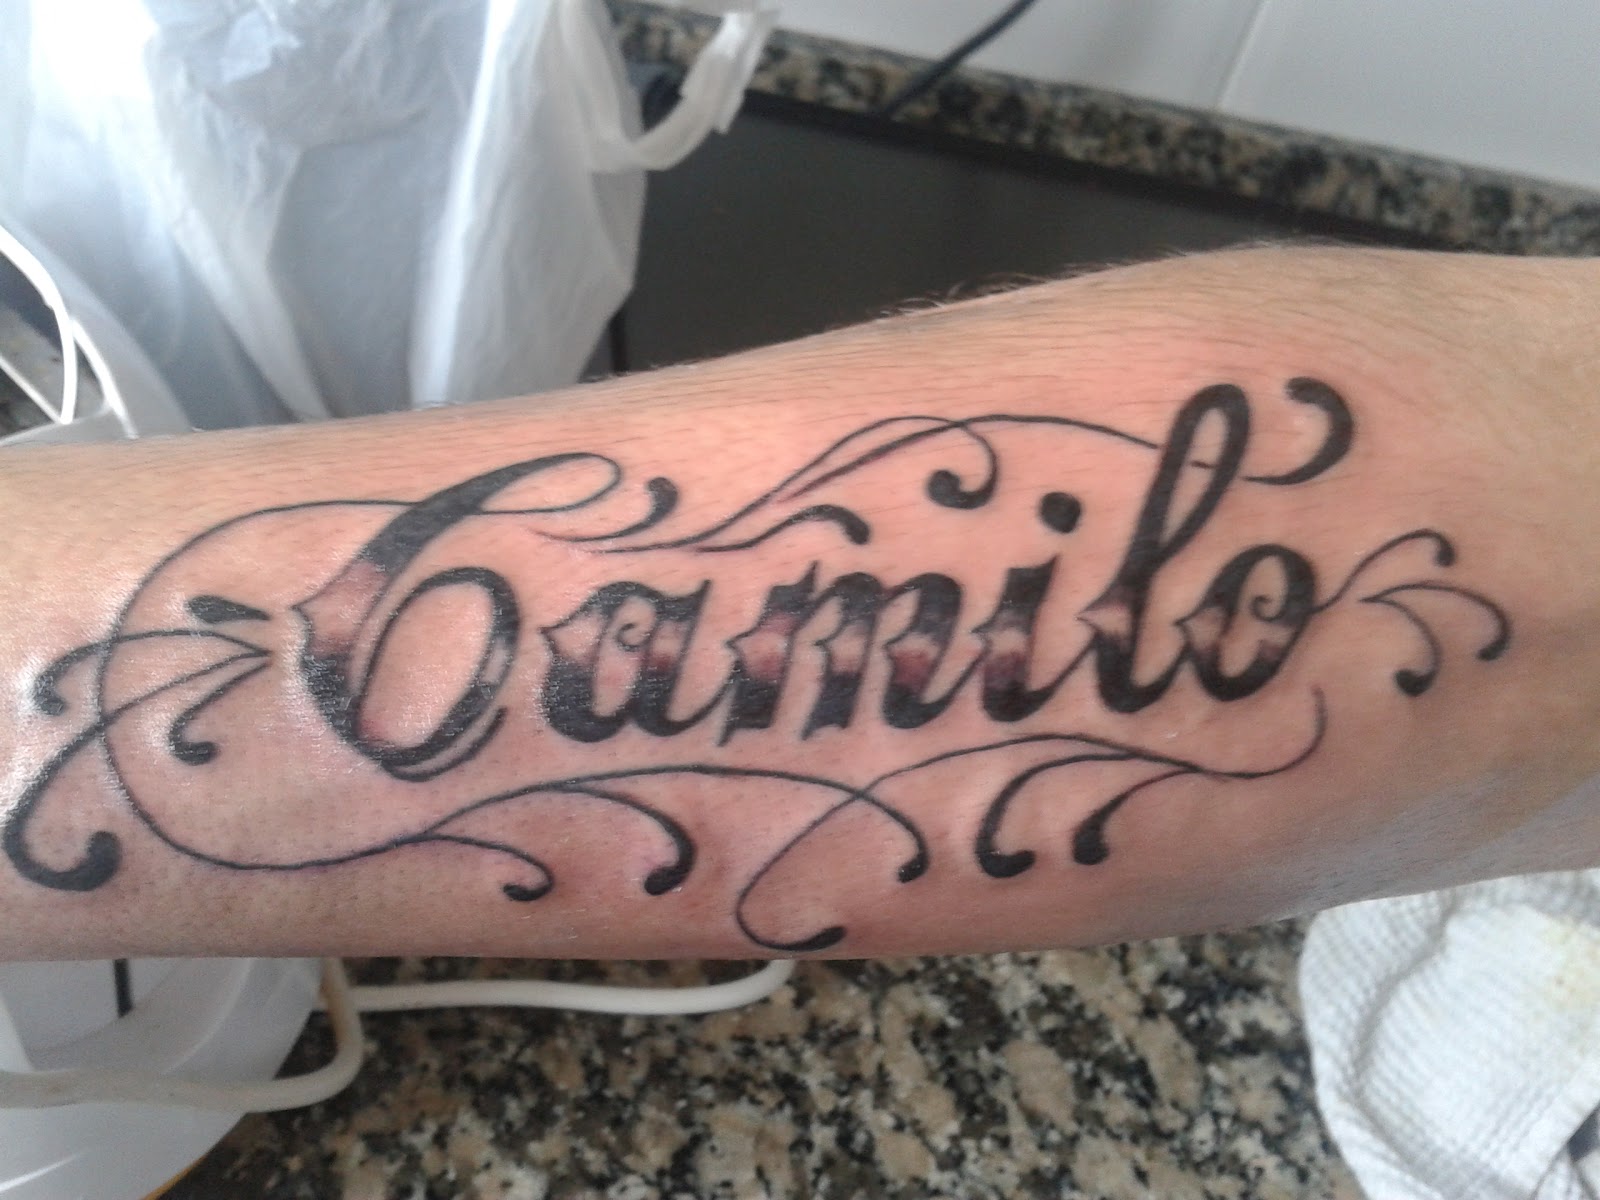 exive S tattoo: Letras cholas